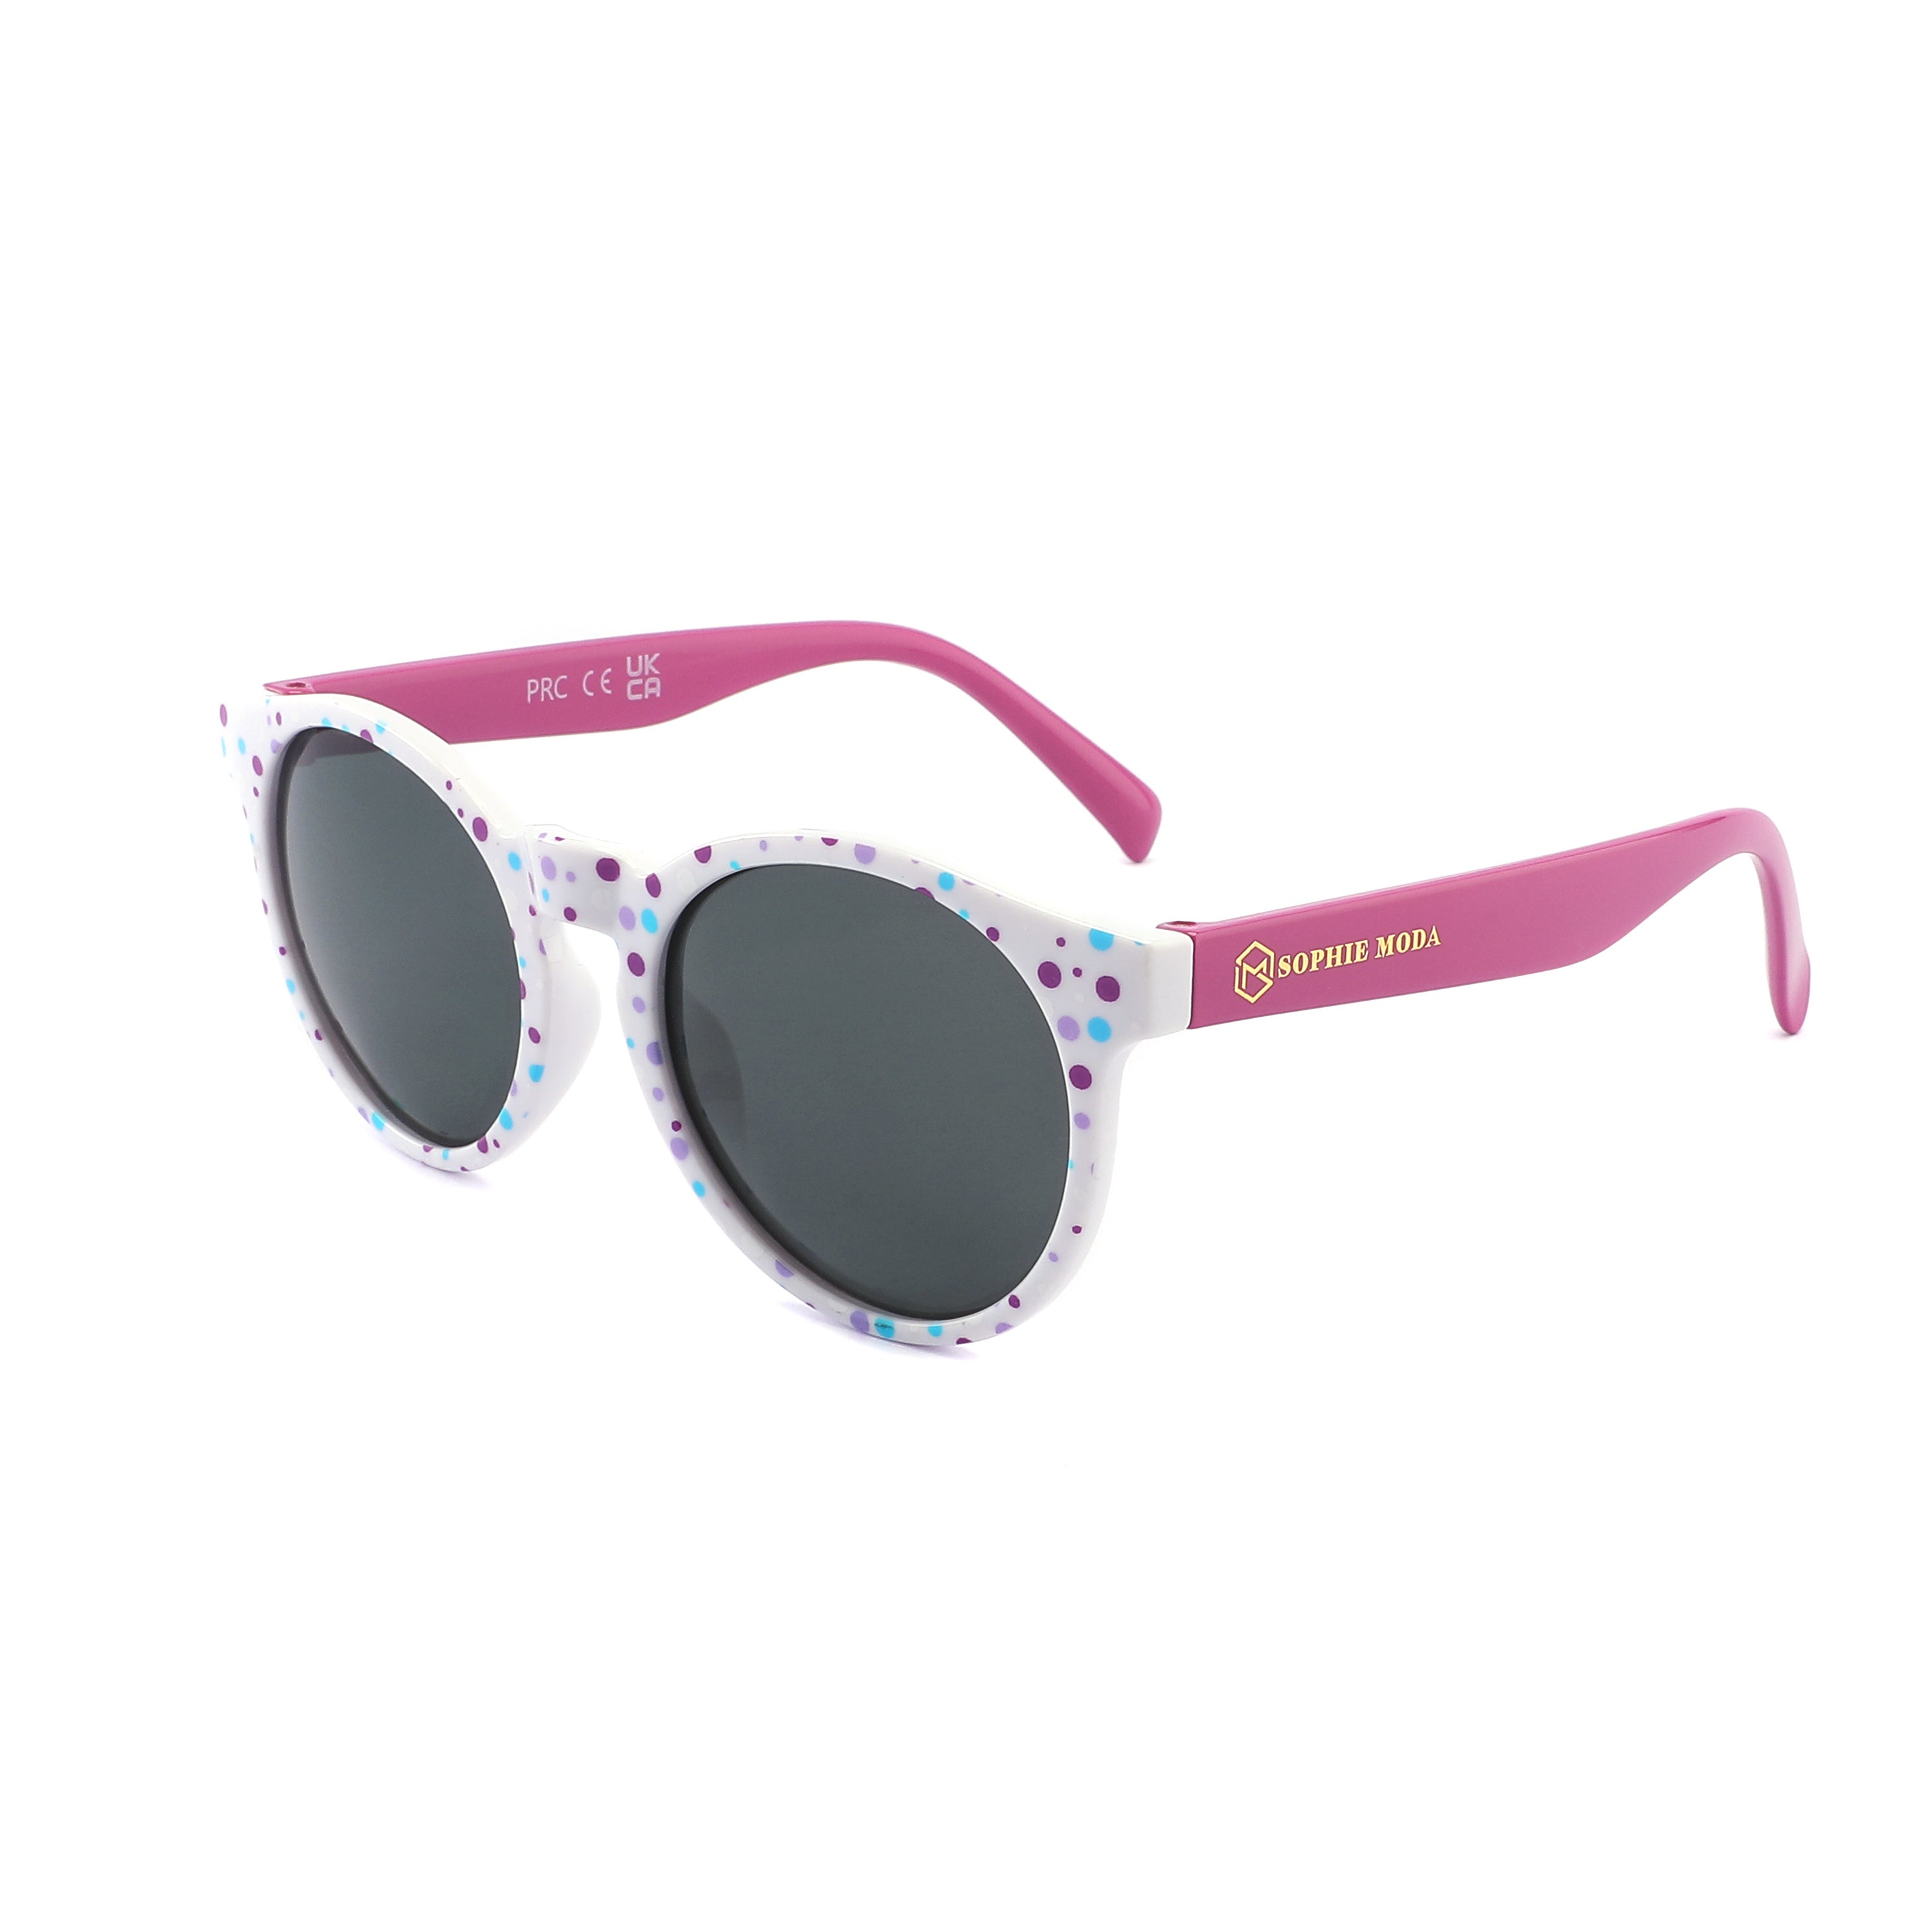 Sunglasses Kids: Tutti Frutti Polarised